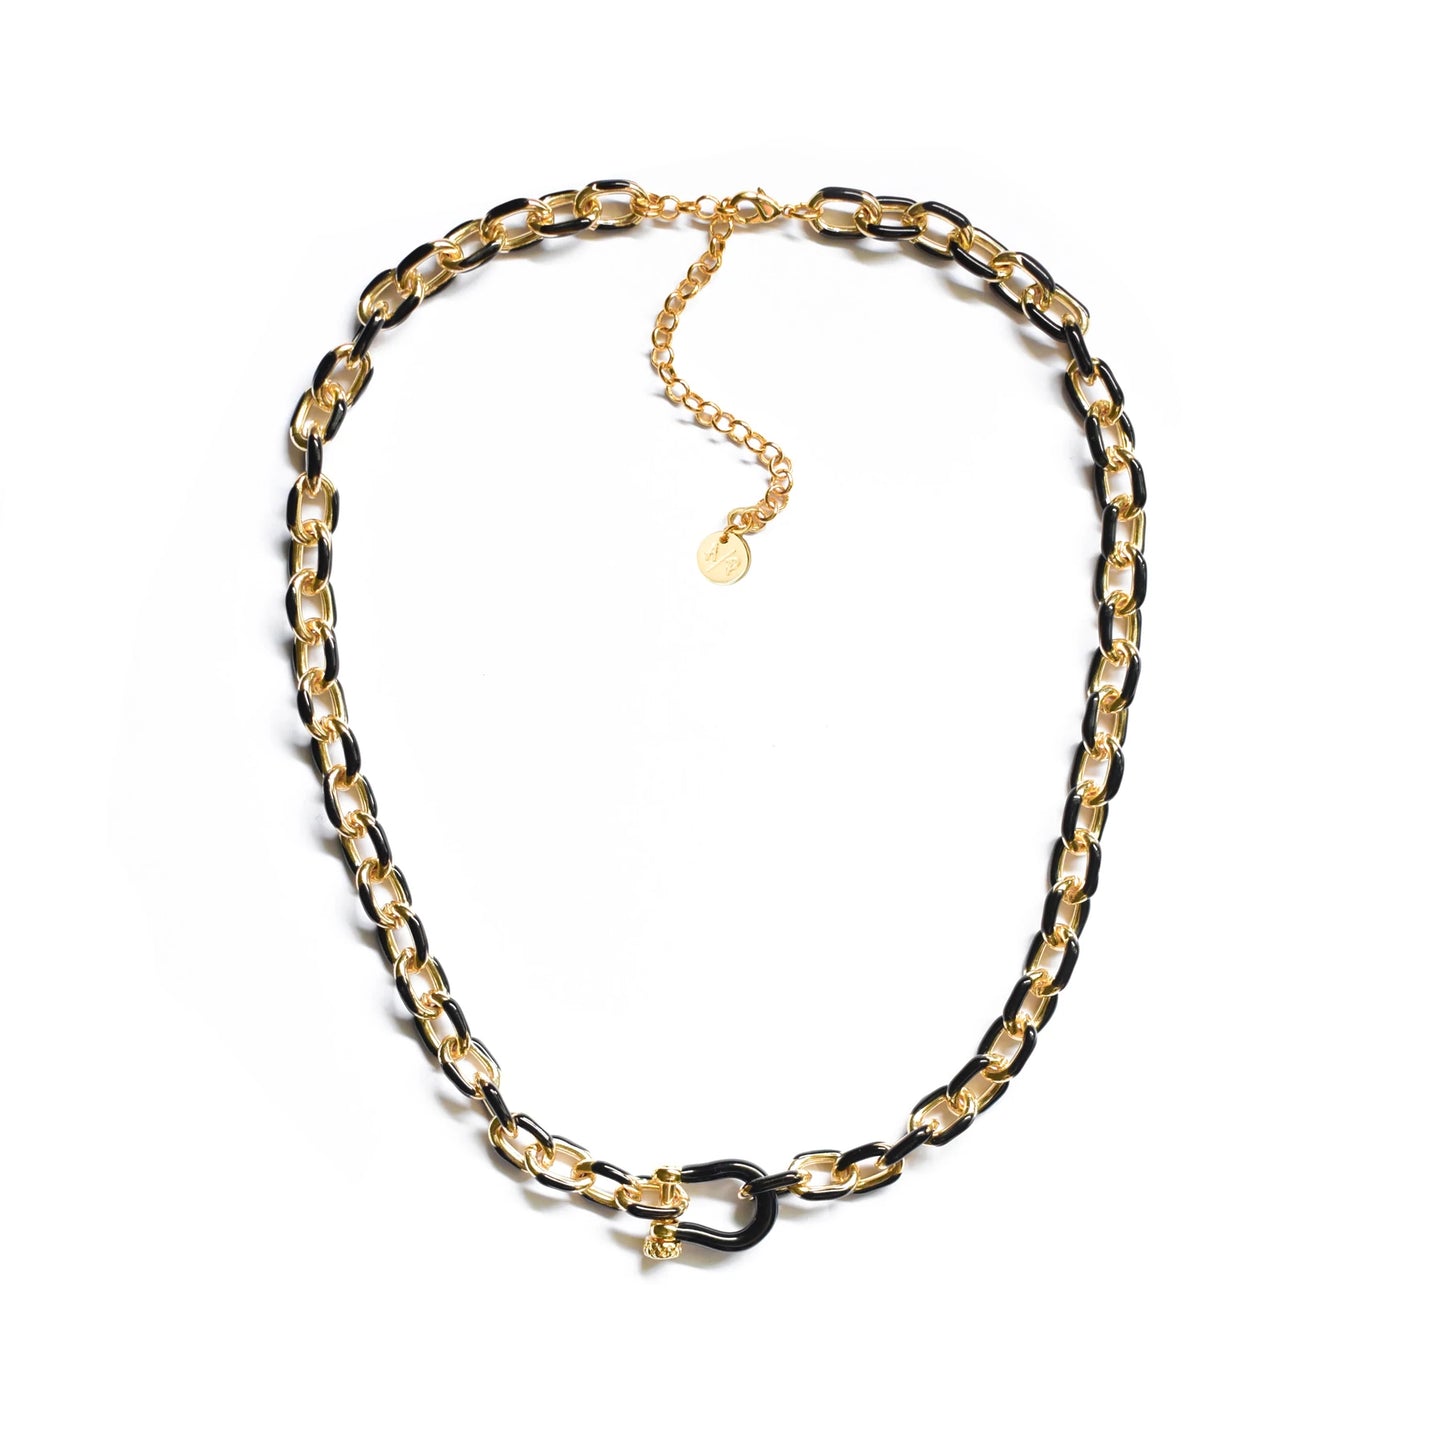 Carabiner Chain Necklace Black - Adriana Pappas Designs